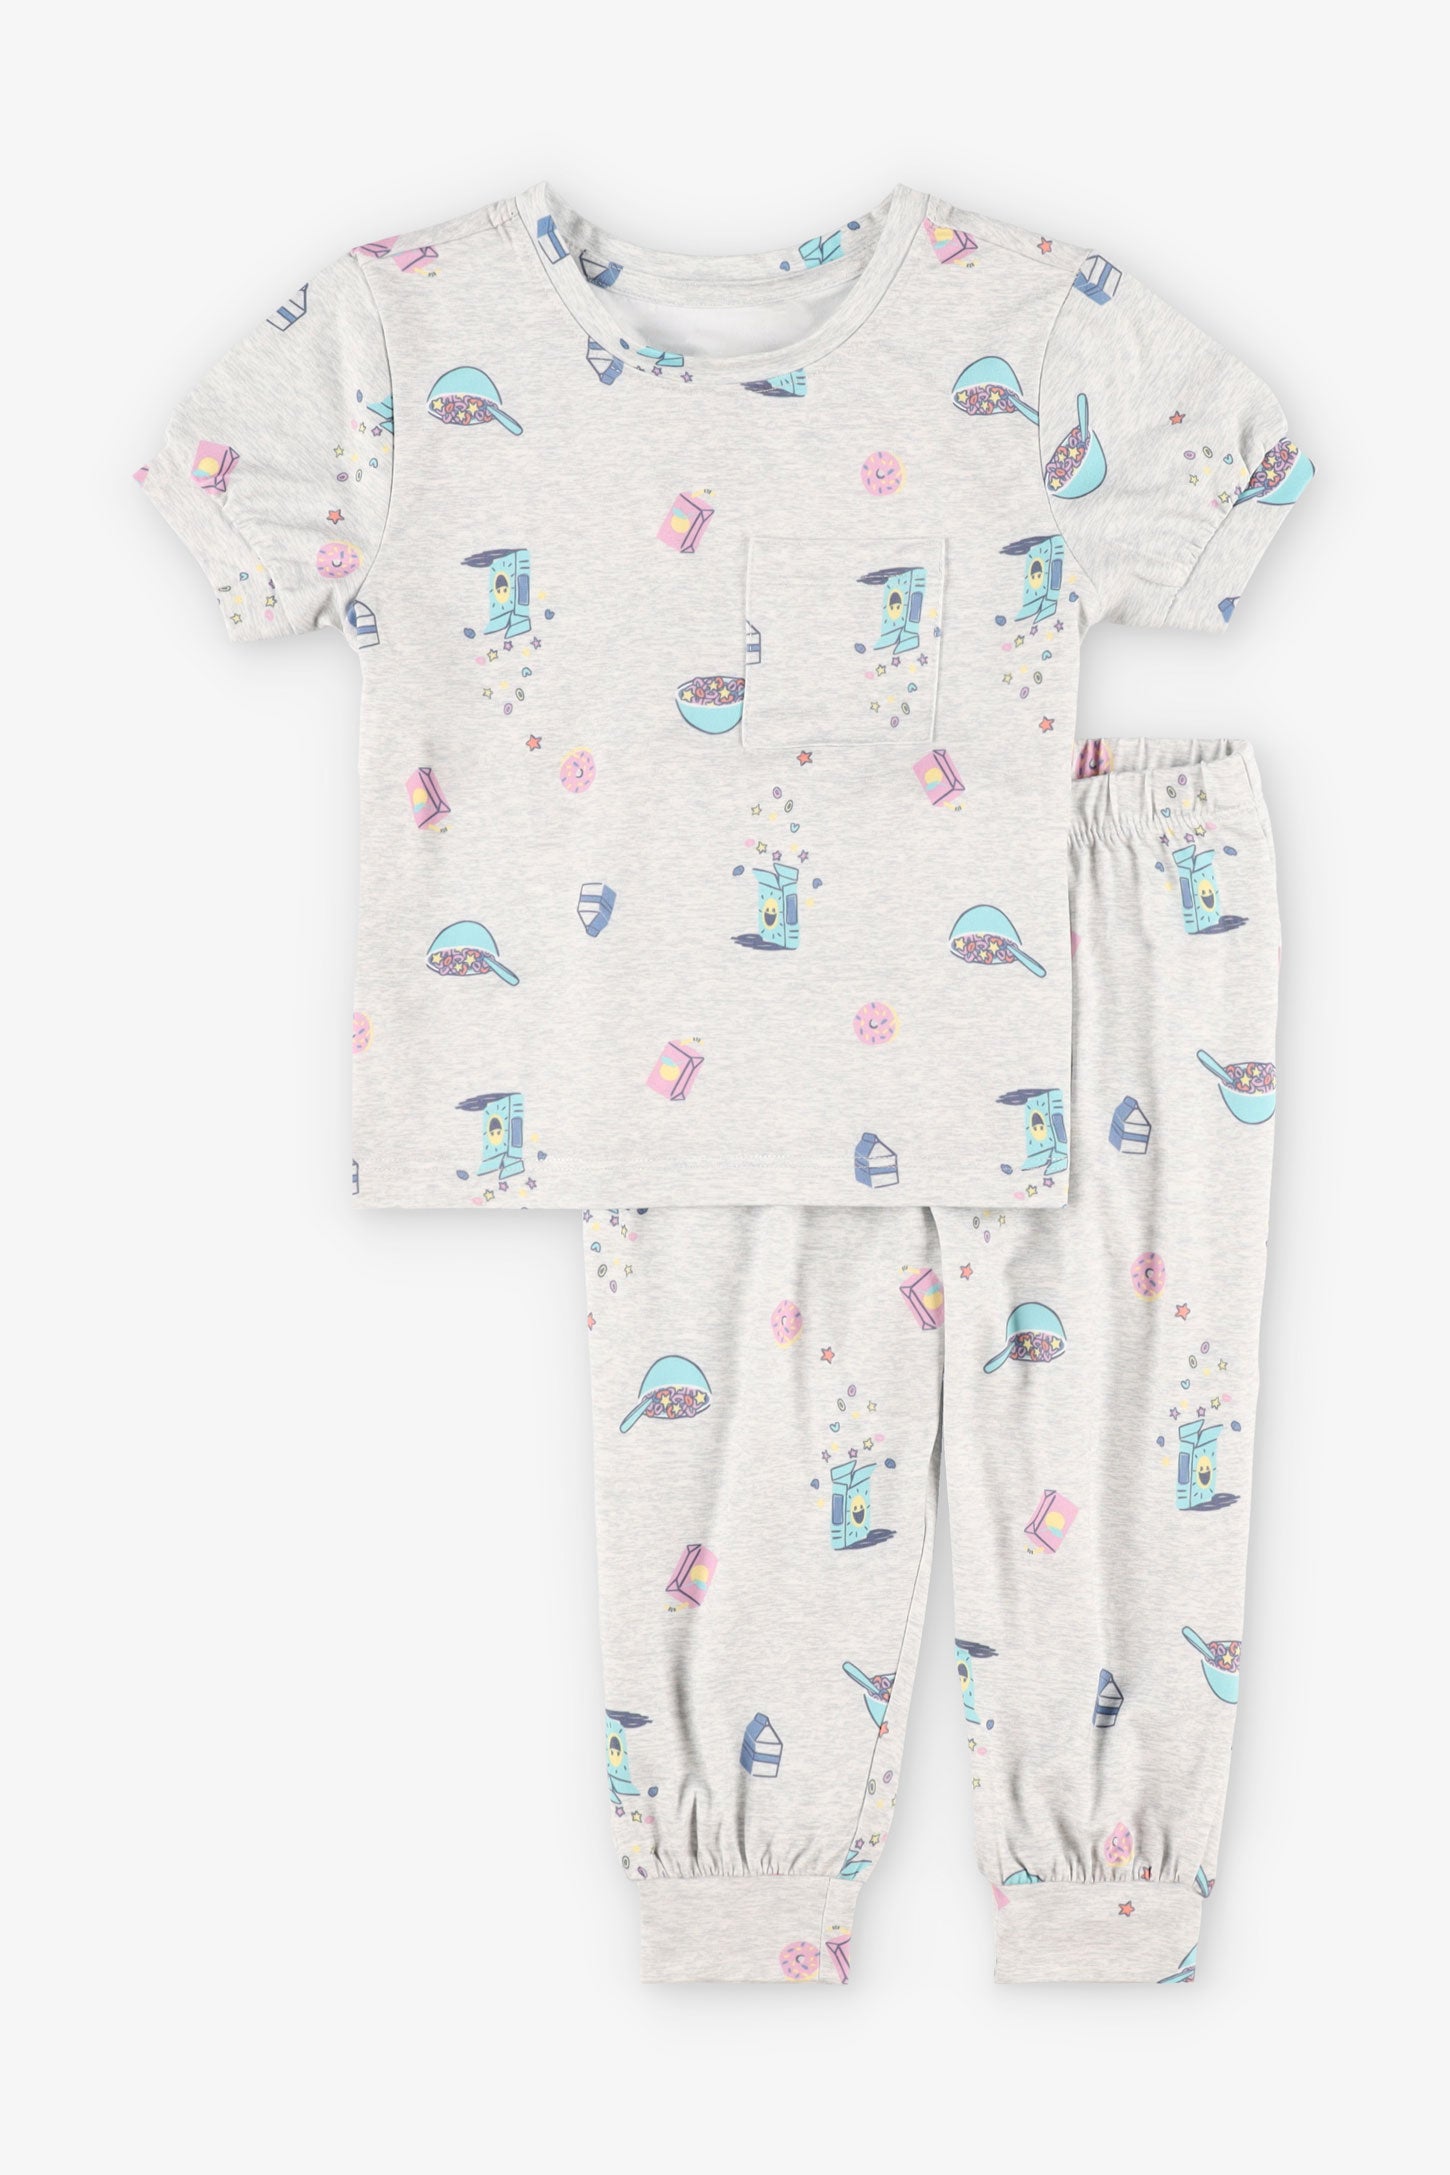 Pyjama 2-pièces Moss assorti famille, 2/35$ - Enfant fille && GRIS MULTI